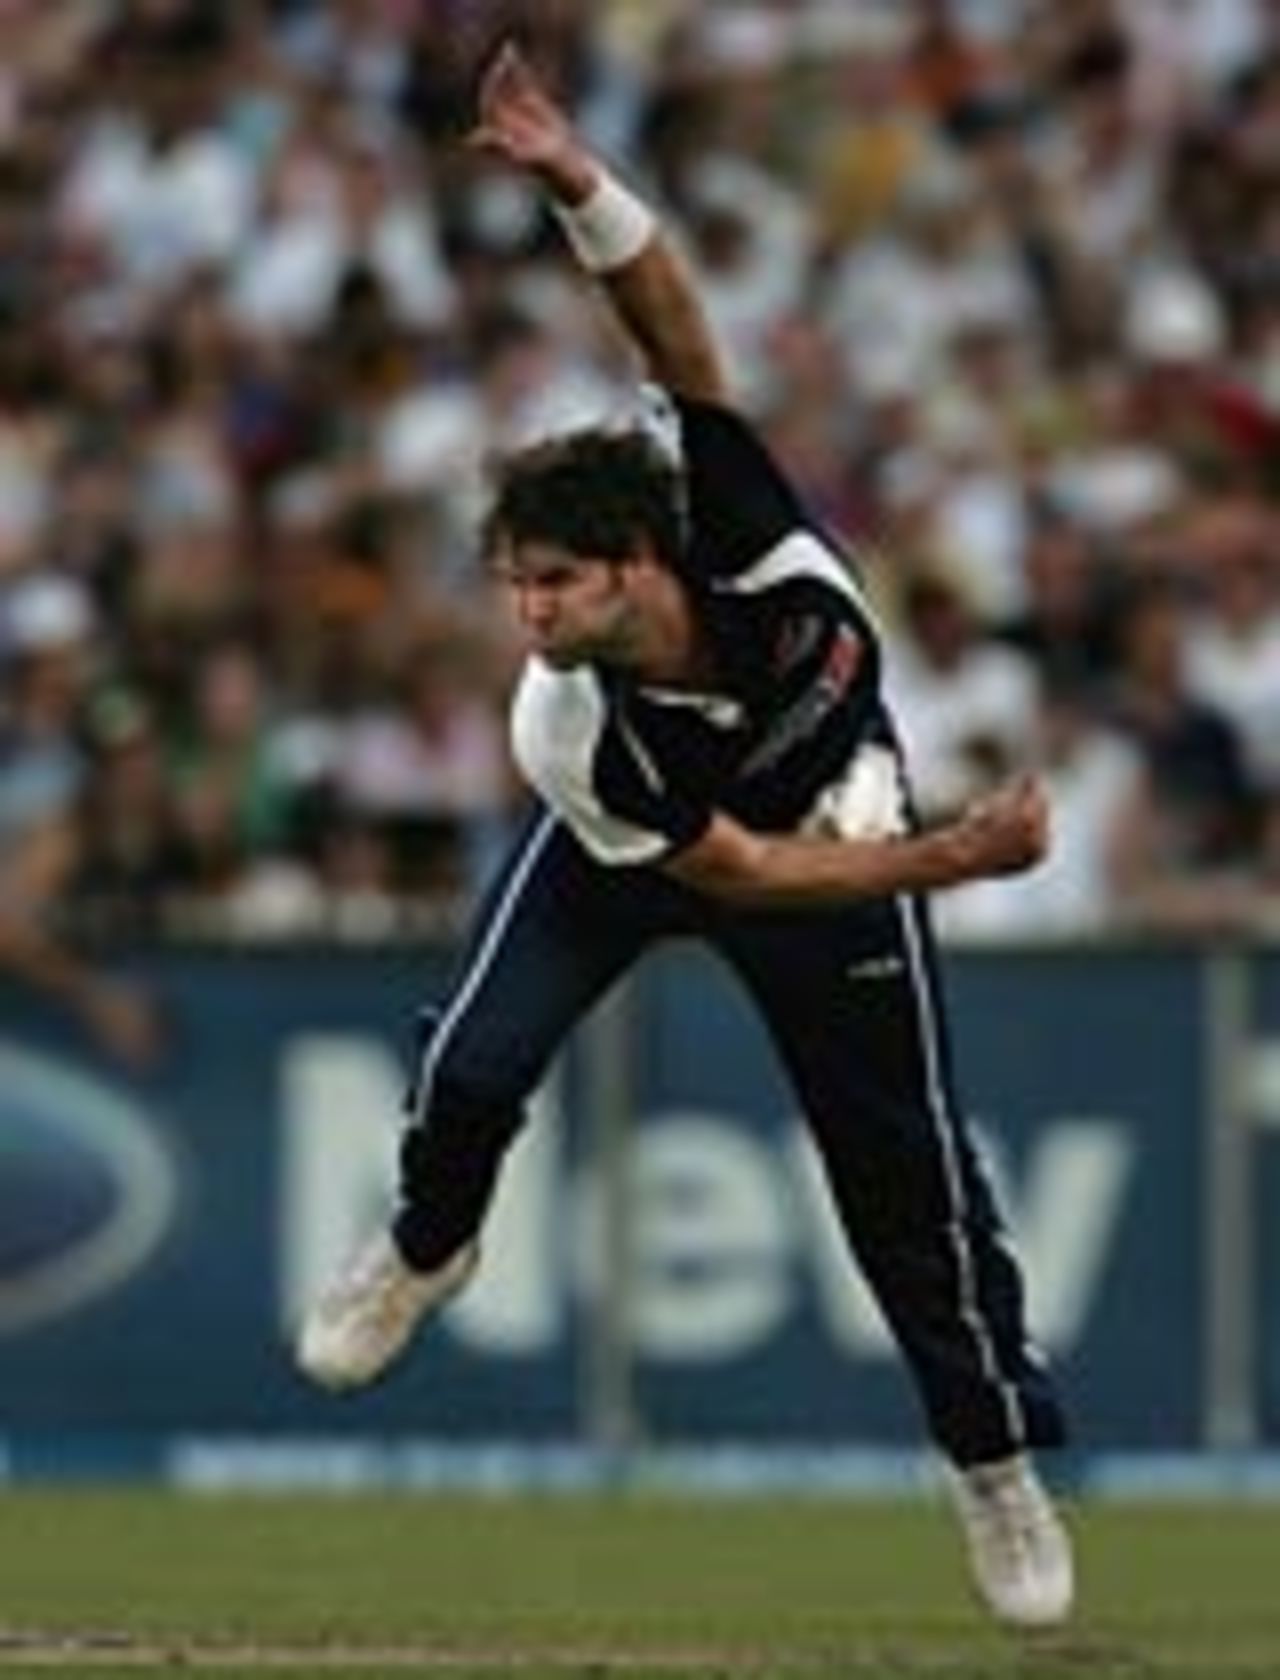 Chris Cairns bowling, ICC World XI v ACC Asia XI ODI, Melbourne, January 10, 2005